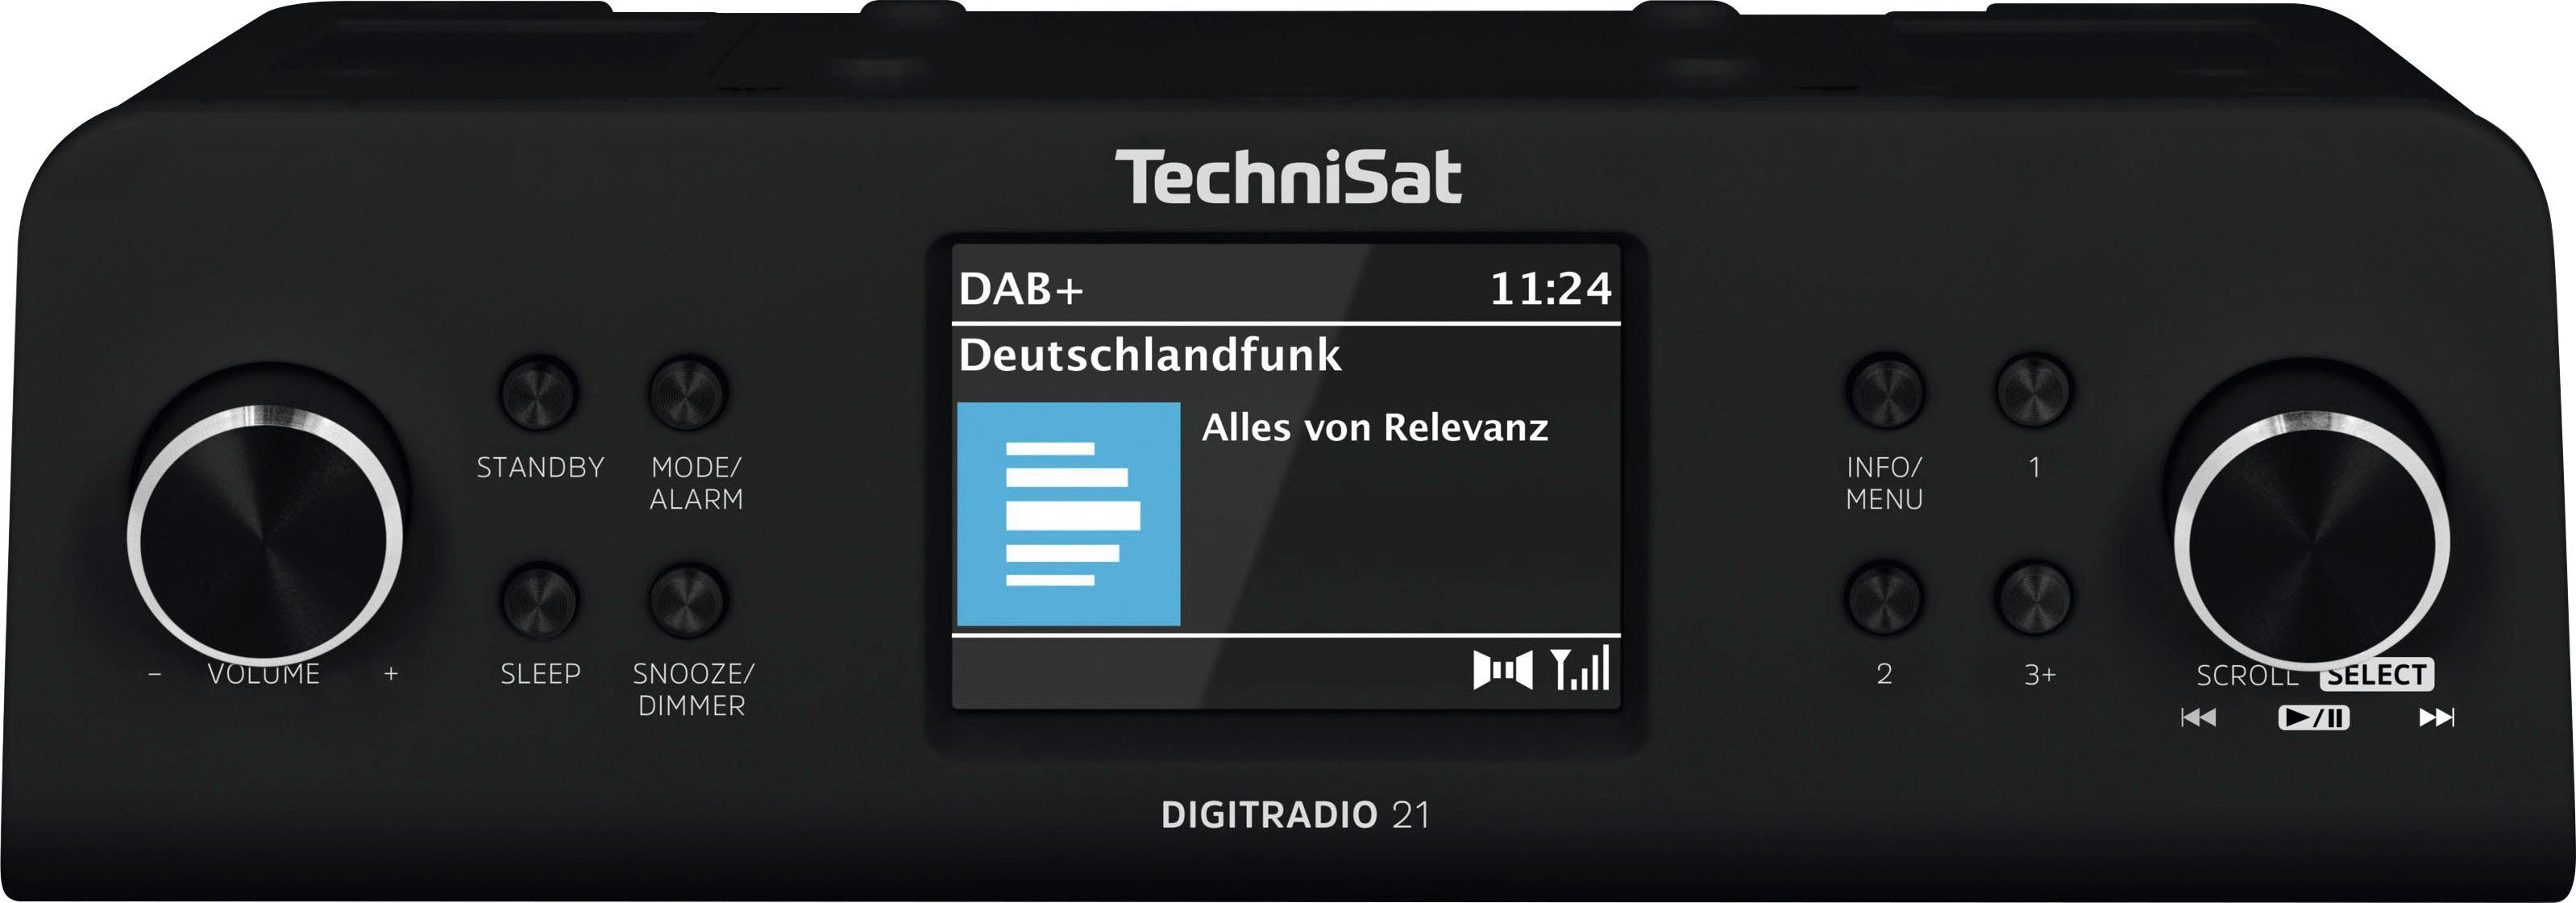 TechniSat DIGITRADIO 21 Küchen-Radio (Digitalradio (DAB), UKW mit RDS, 2 W, Unterbau-Radio,Küchen-Radio) schwarz | Küchenradios